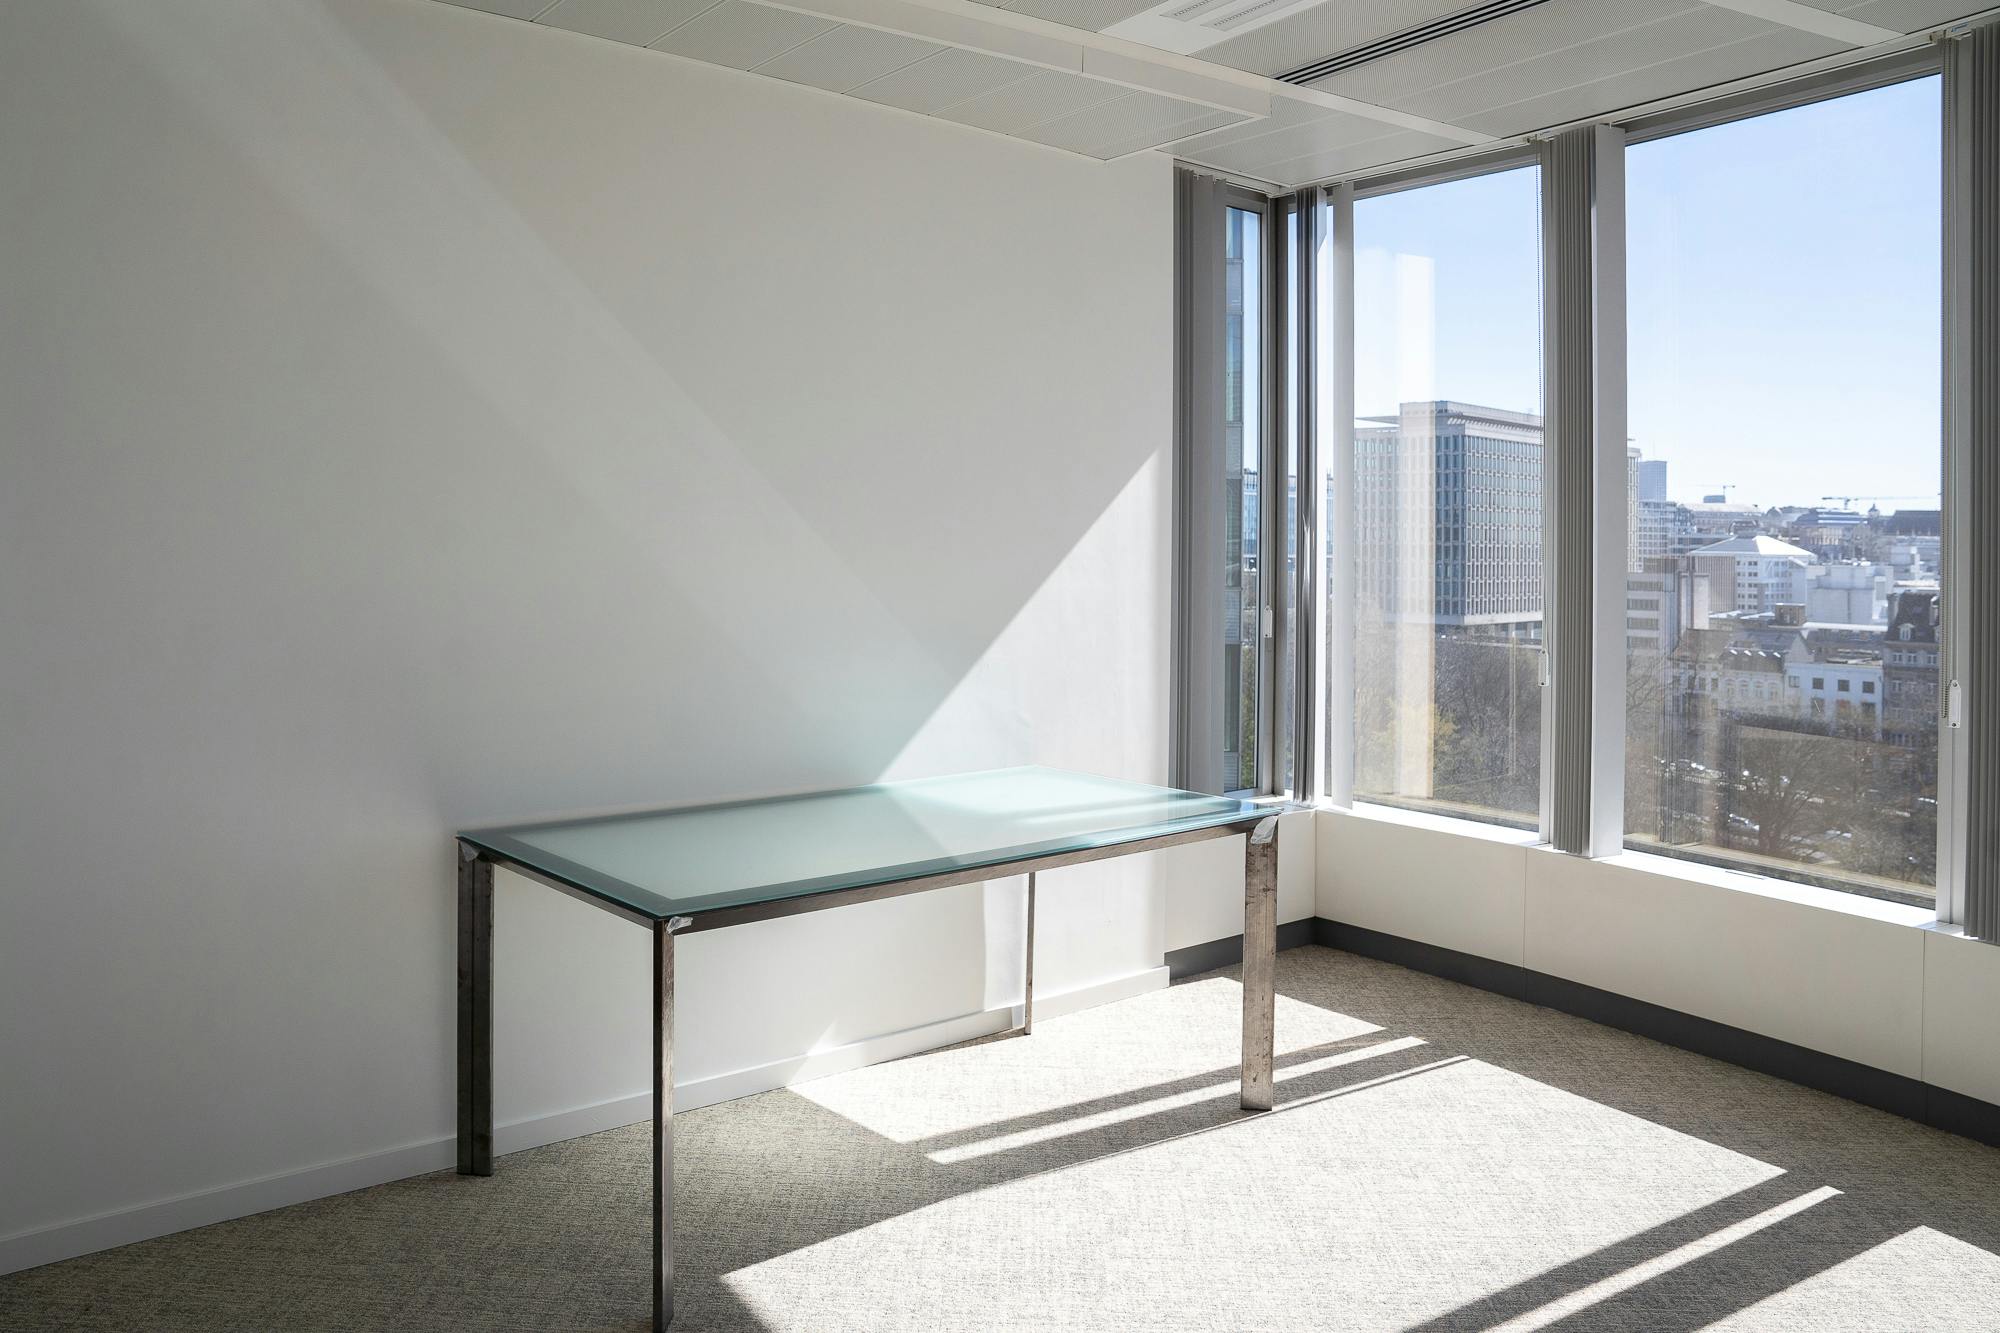  ODILE DECQ Glazen bureau met metalen poten - Relieve Furniture